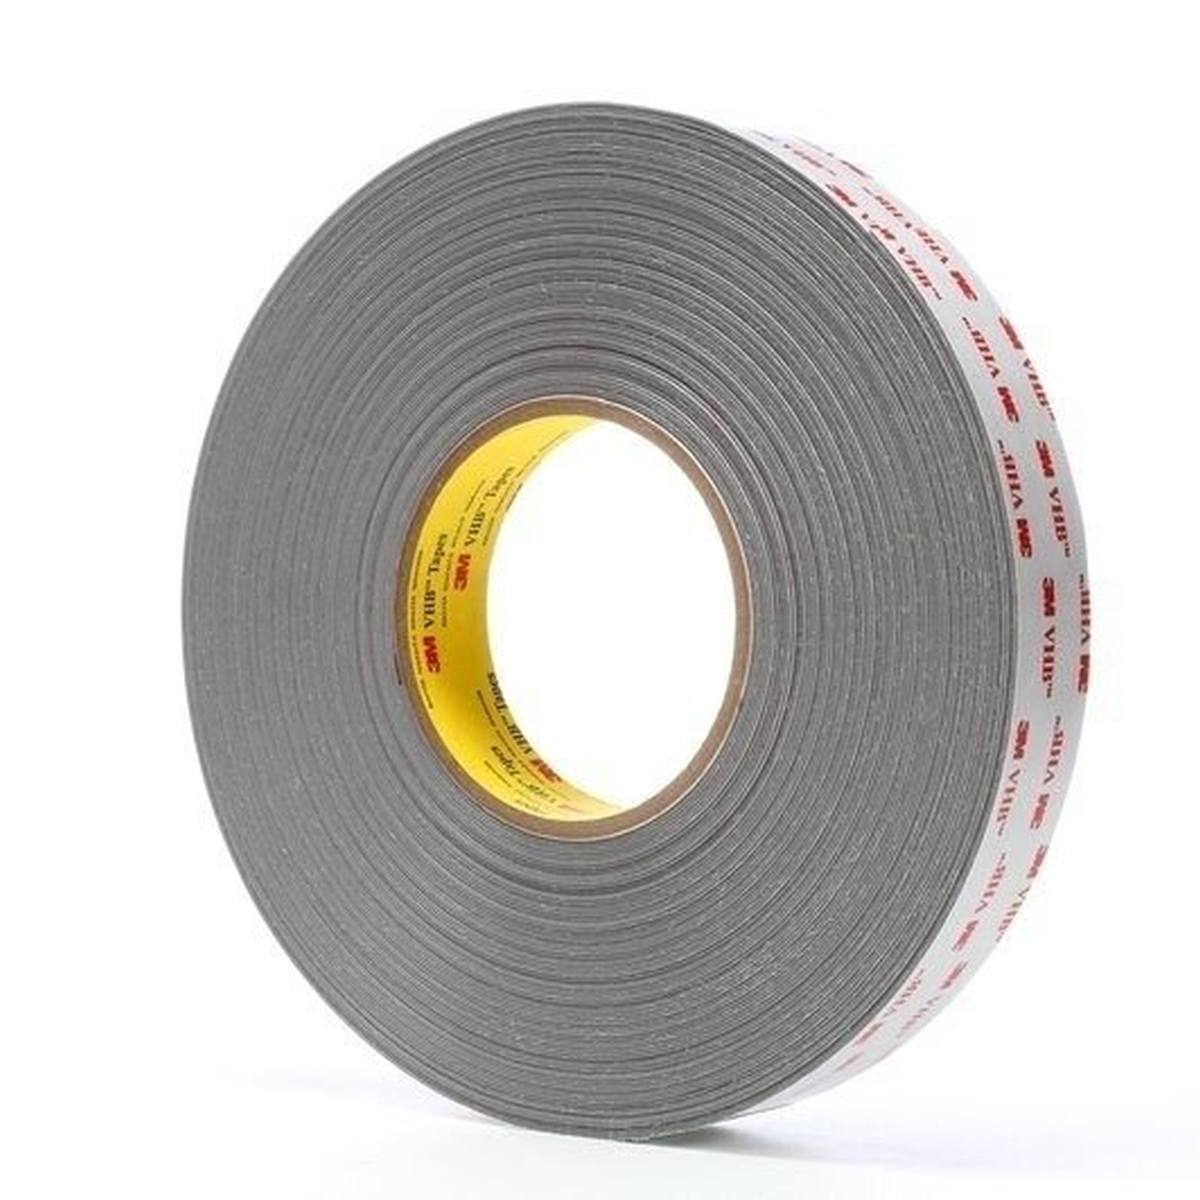 3M VHB adhesive tape RP 32 P, gray, 9 mm x 66 m, 0.8 mm